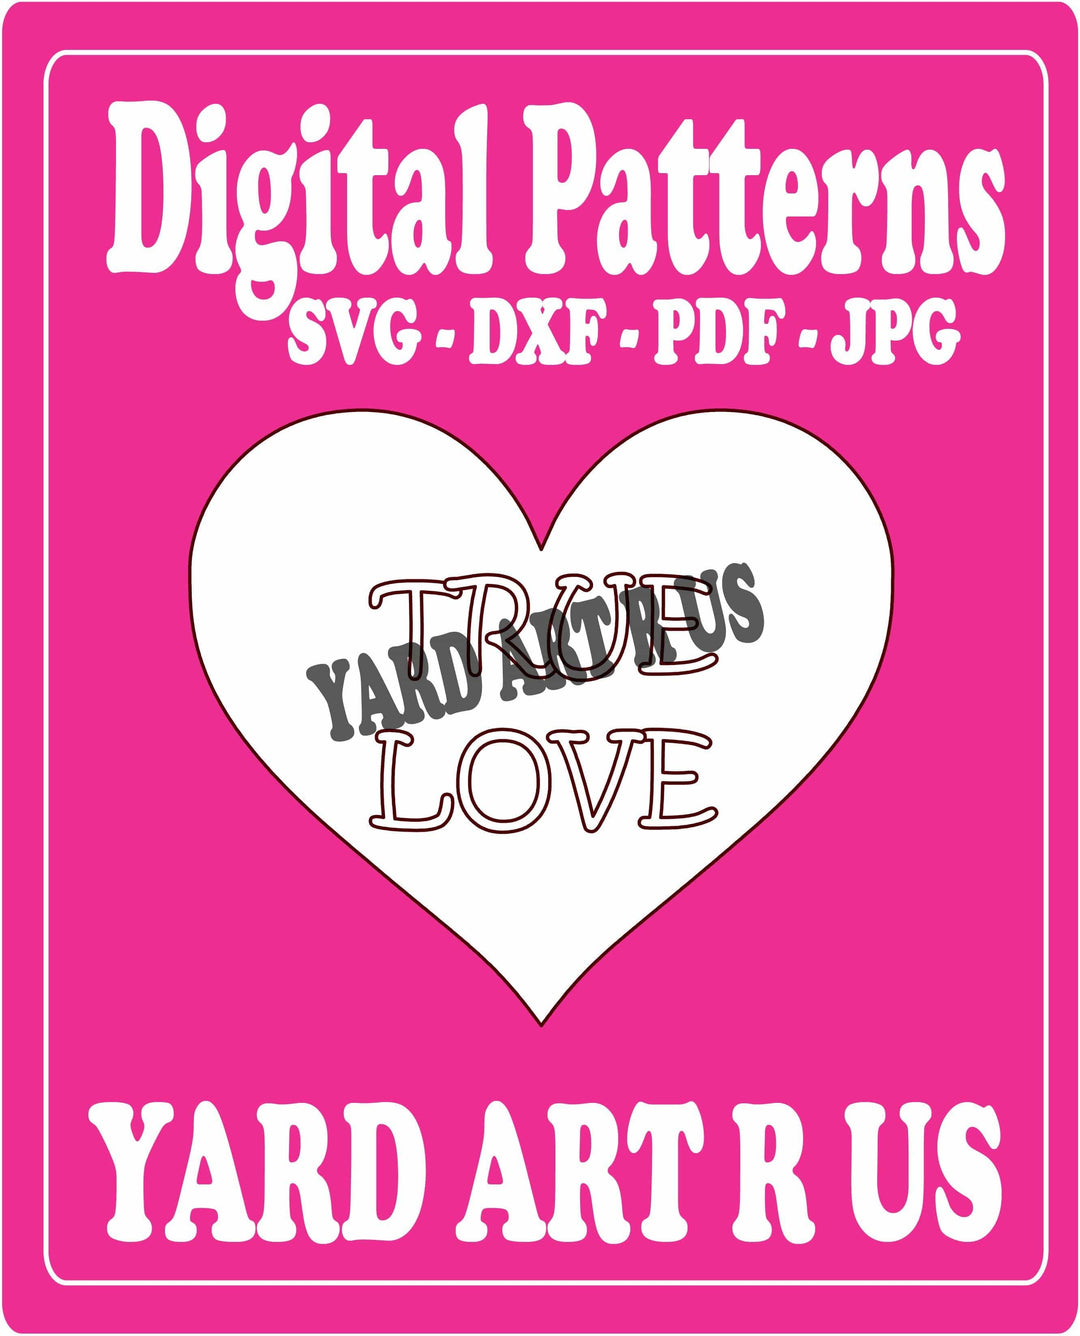 True Love digital pattern; SVG, DXF, PDF, and JPG file options